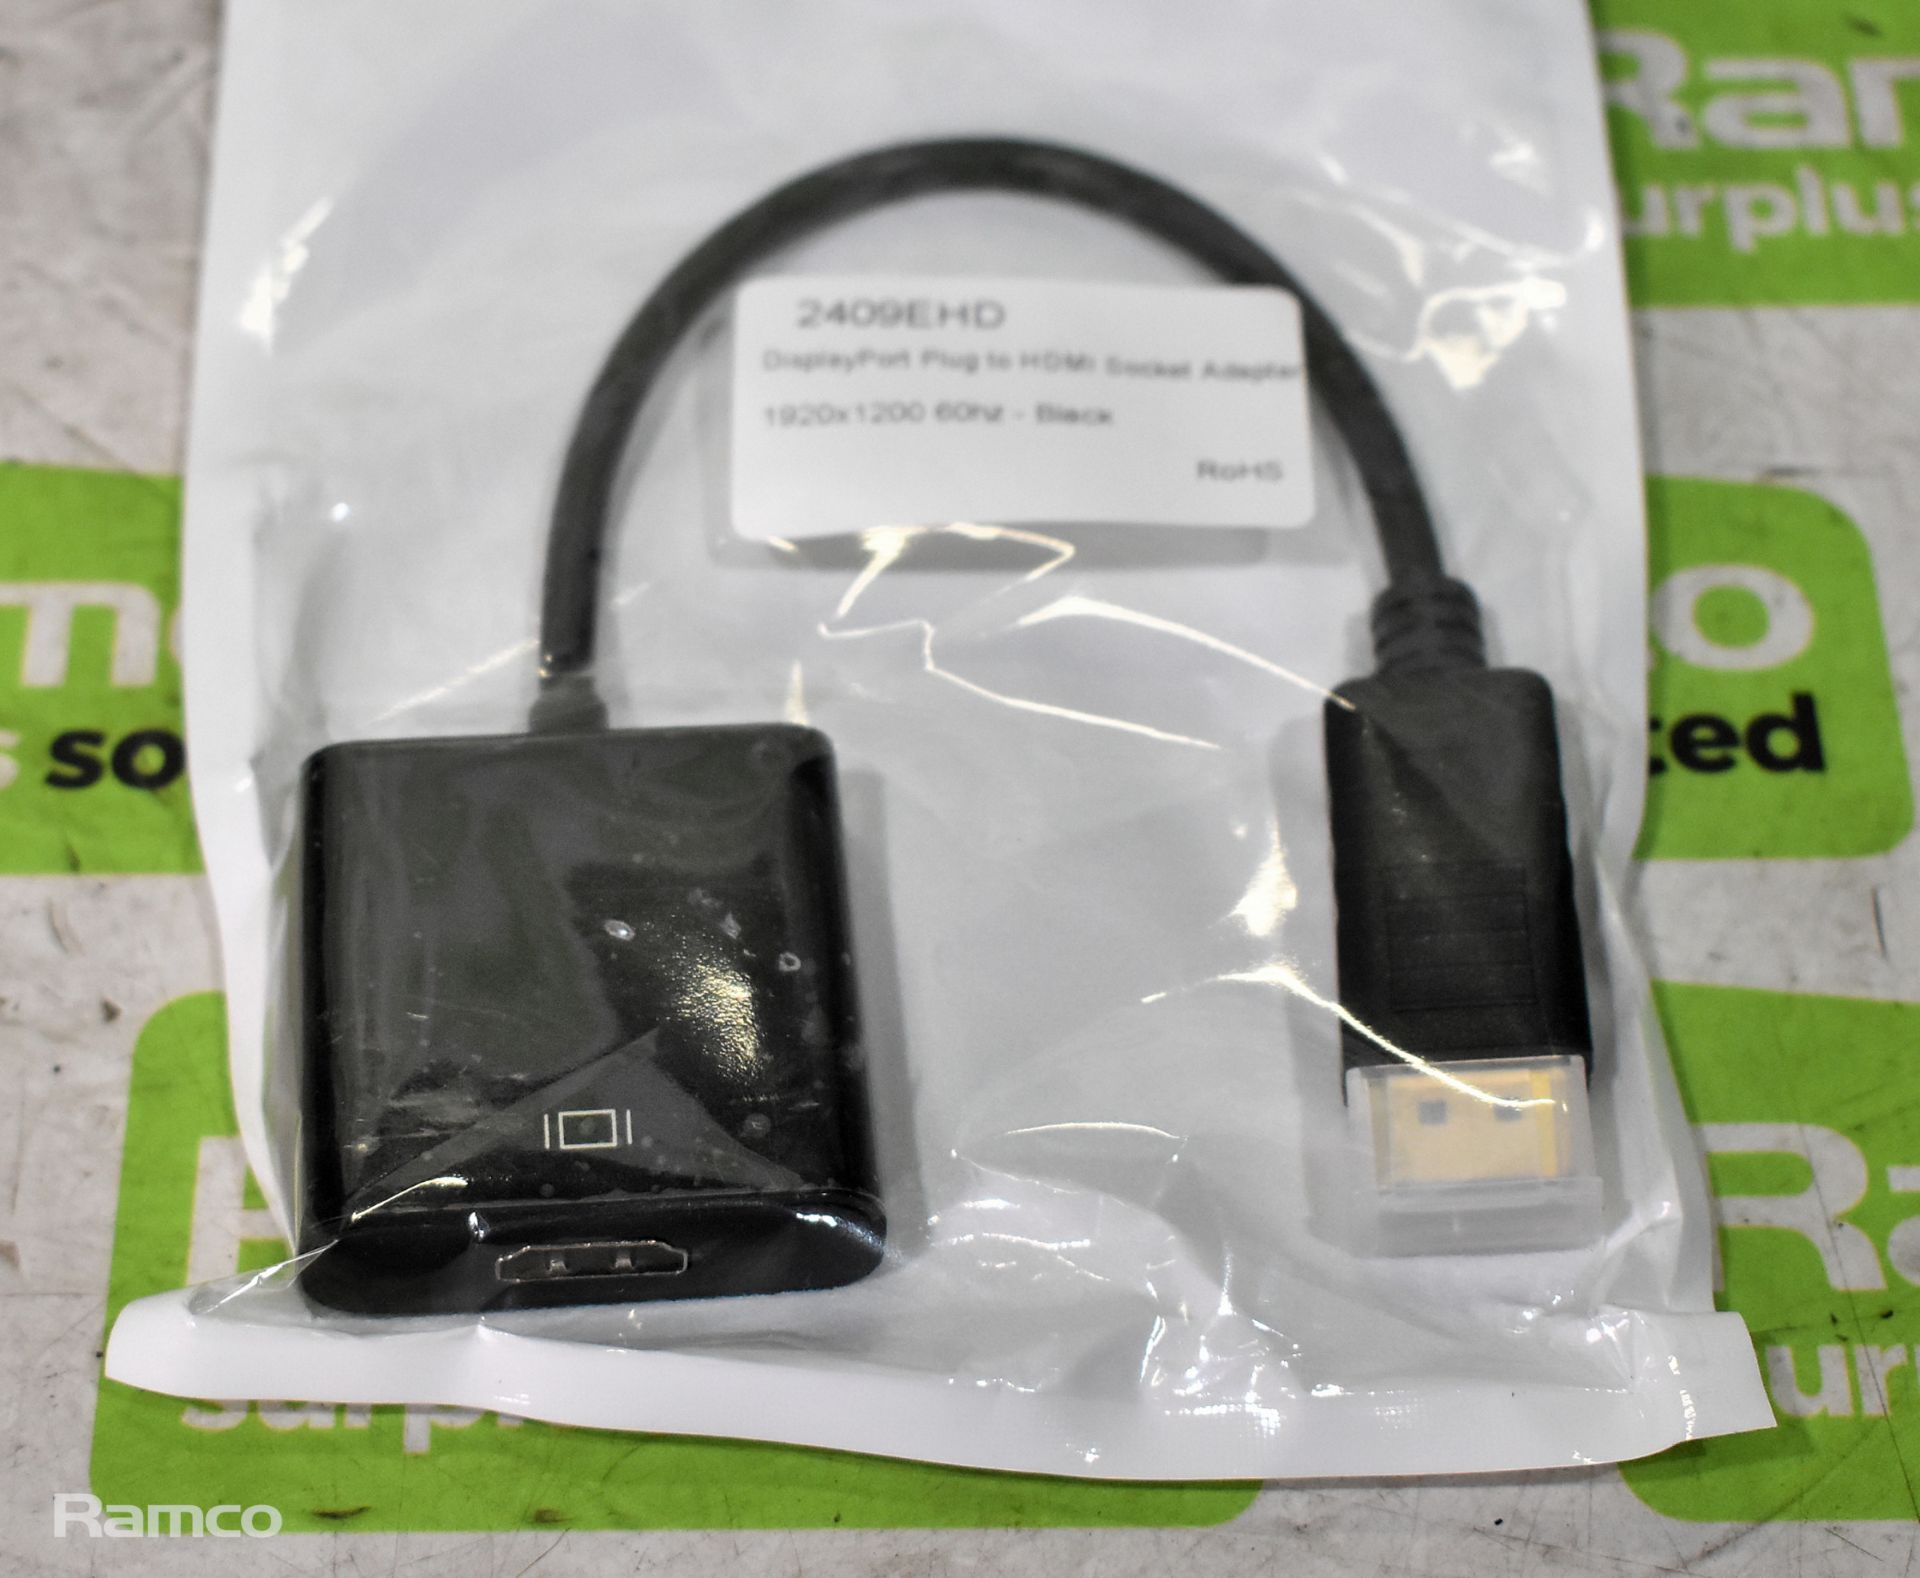 24x 2409EHD displayport plug to HDMI socket adapters - Image 2 of 4